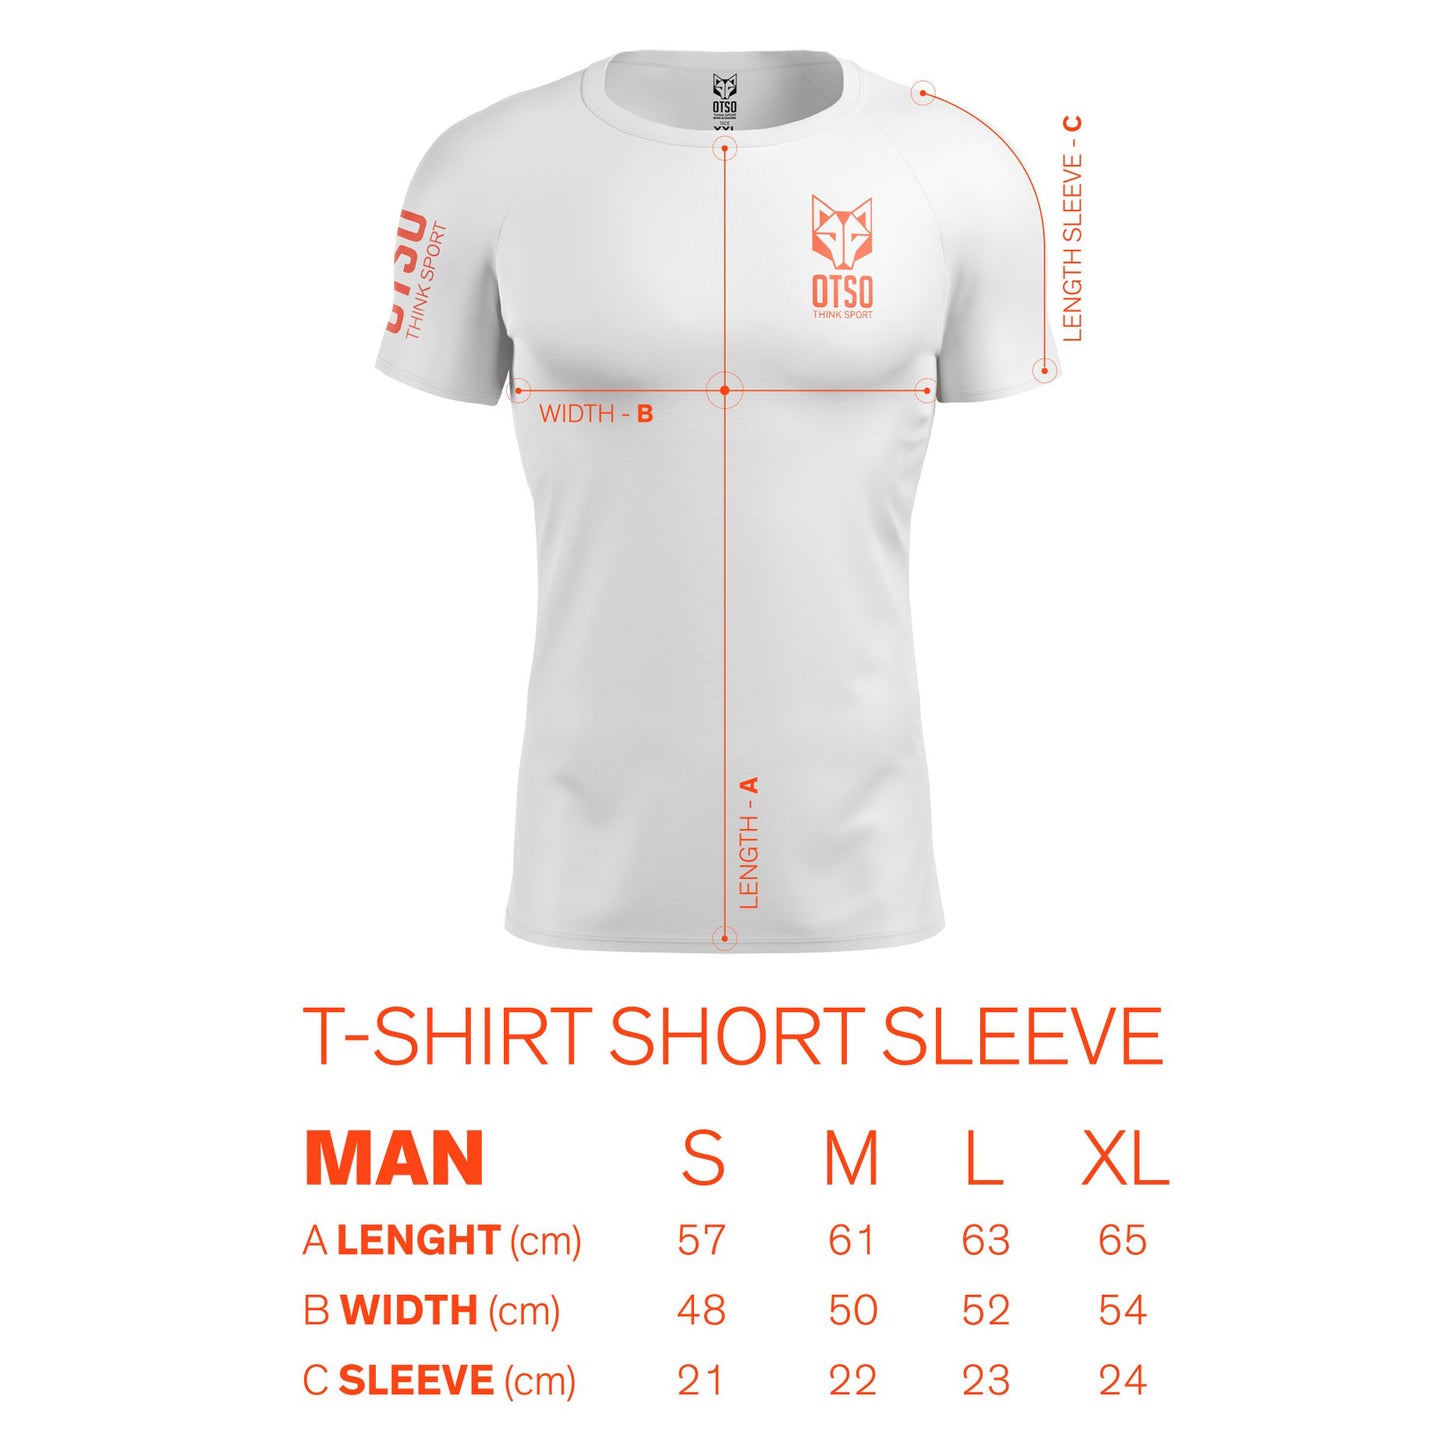 Men's Short Sleeve T-shirt - Popeye Pop Art